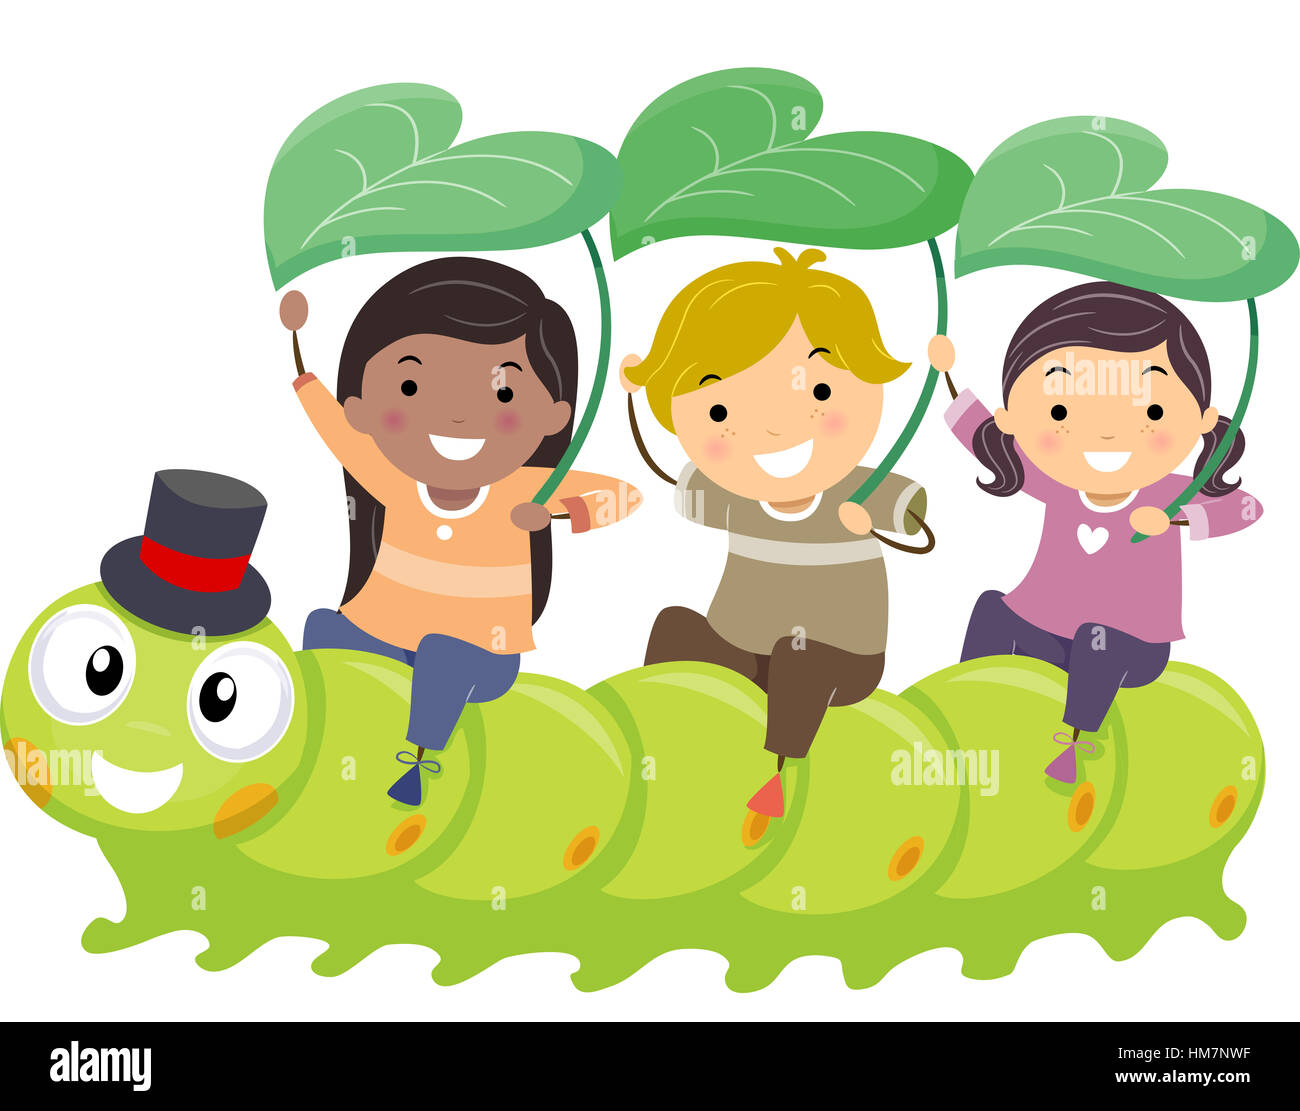 Stickman Illustration of Kids Playfully Riding a Caterpillar Stock Photo